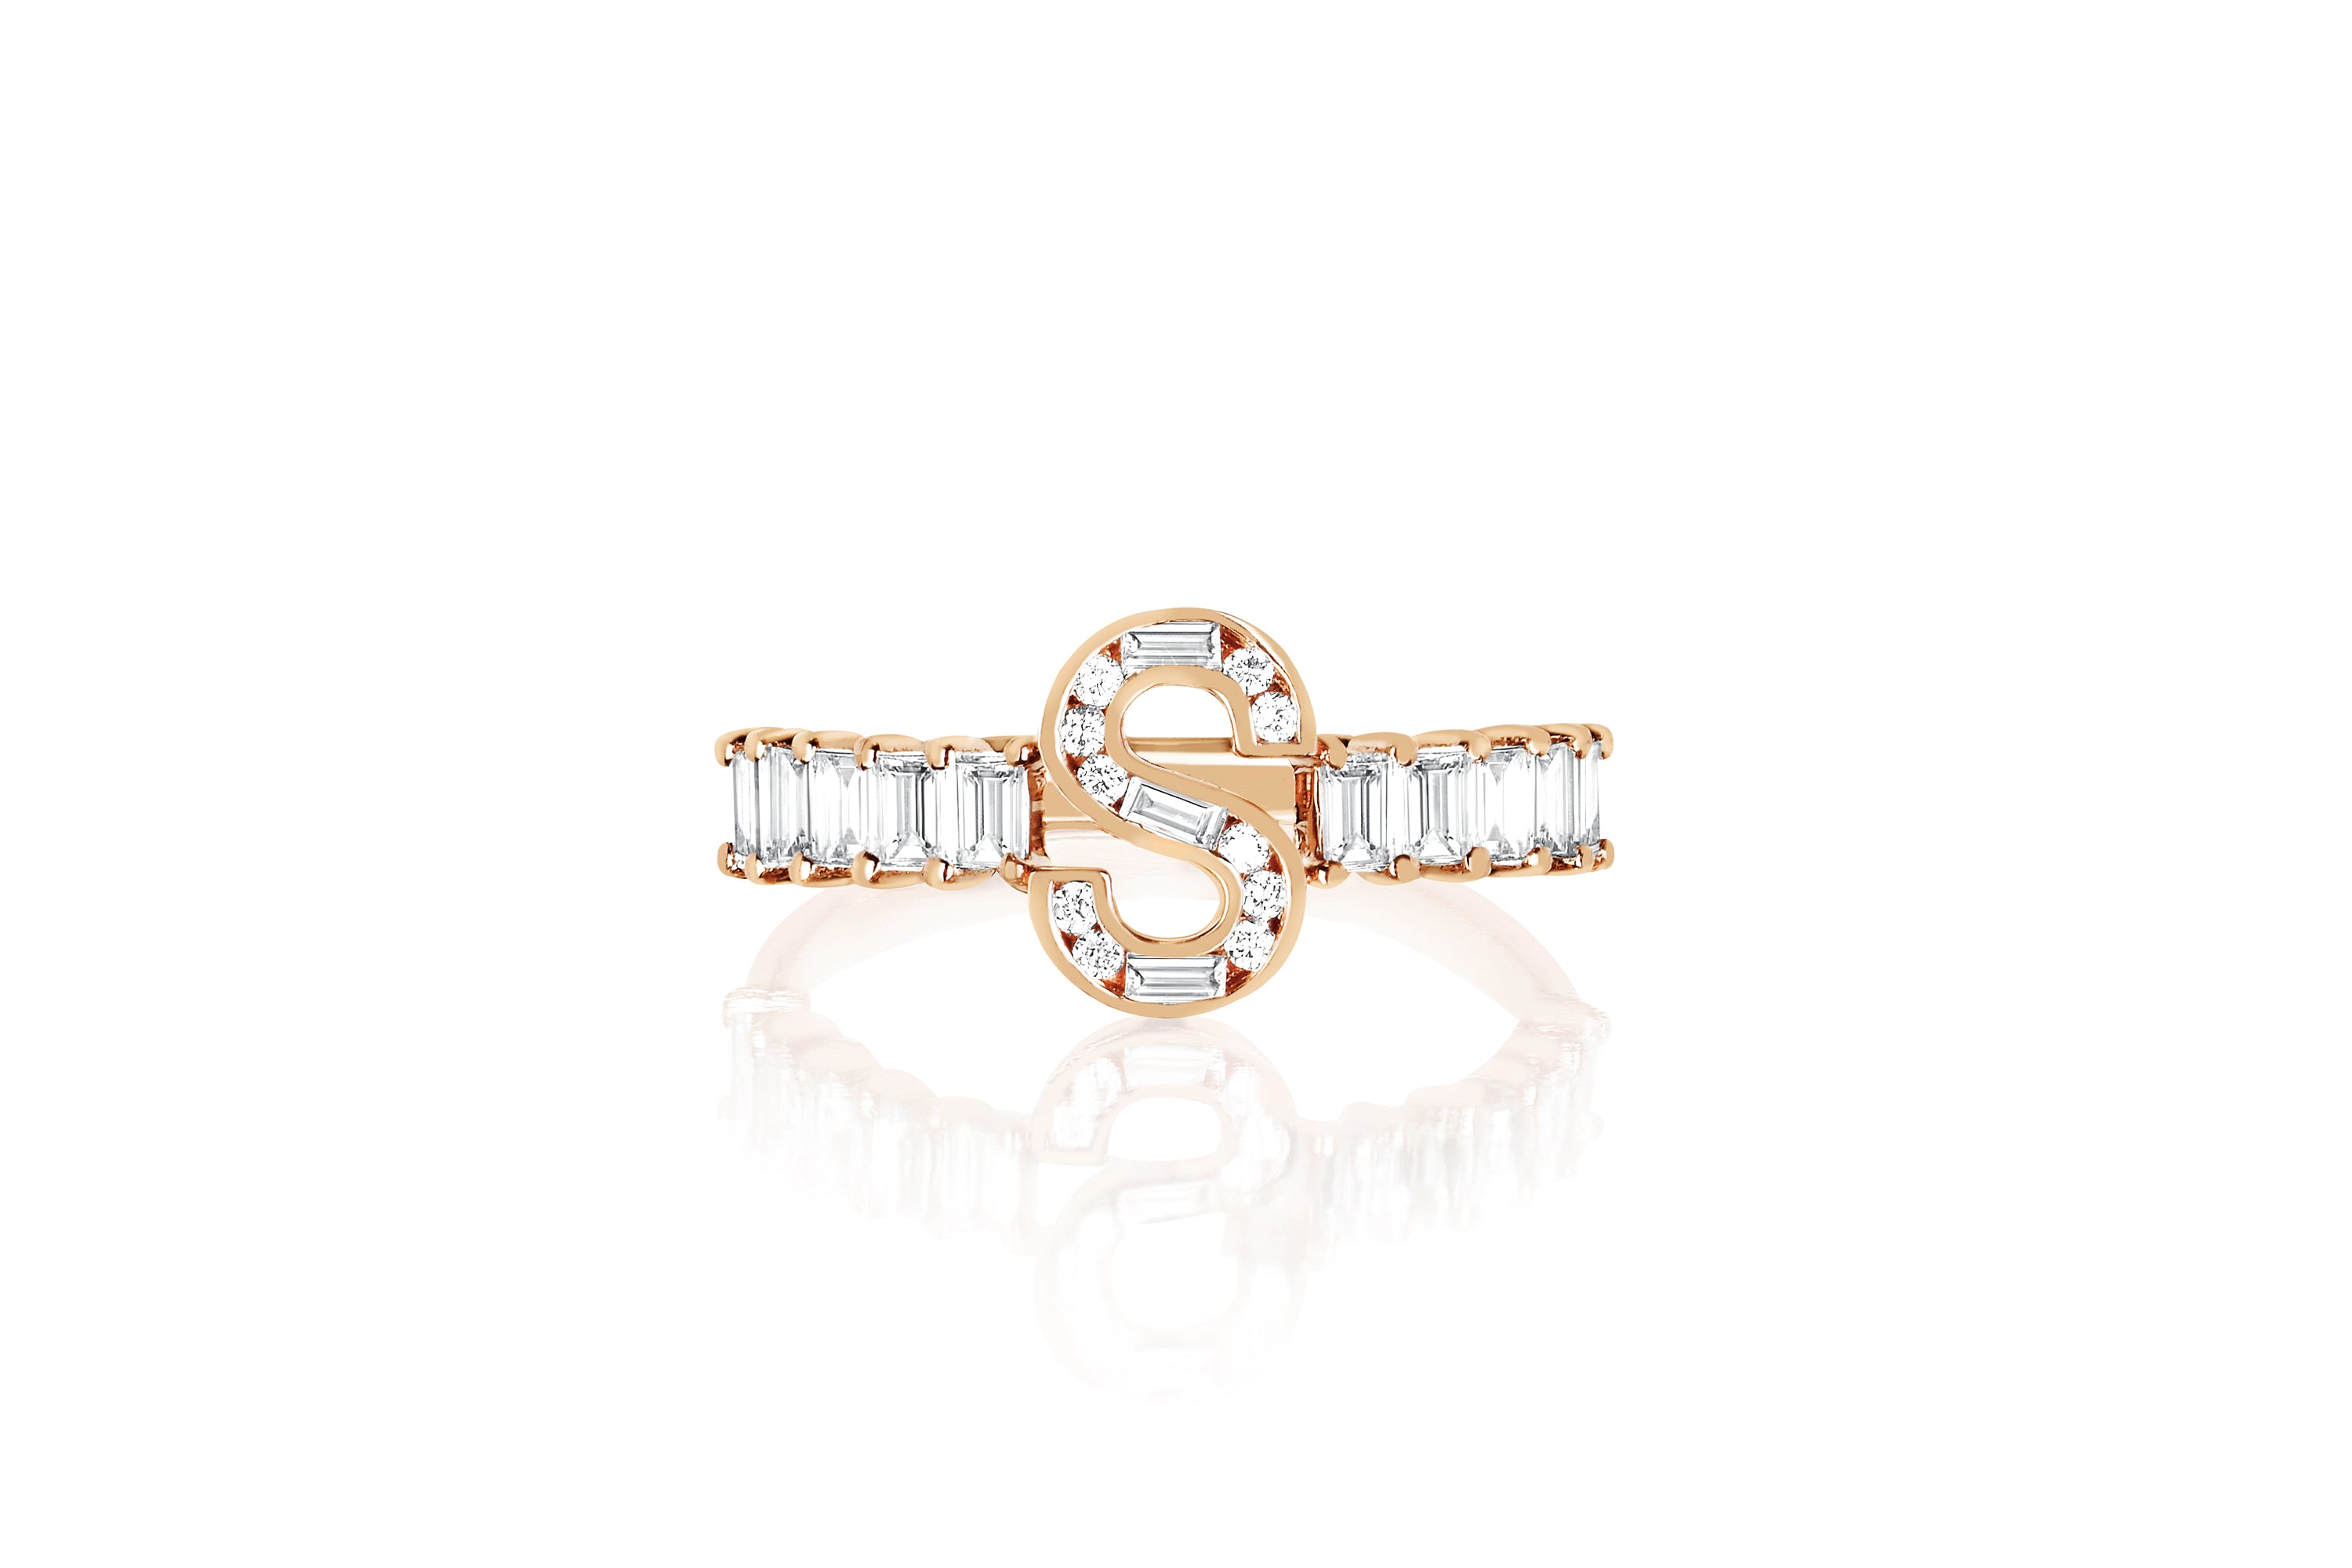 14k (karat) rose gold custom initial ring with baguette diamonds all around and diamonds filling the custom initial "S".